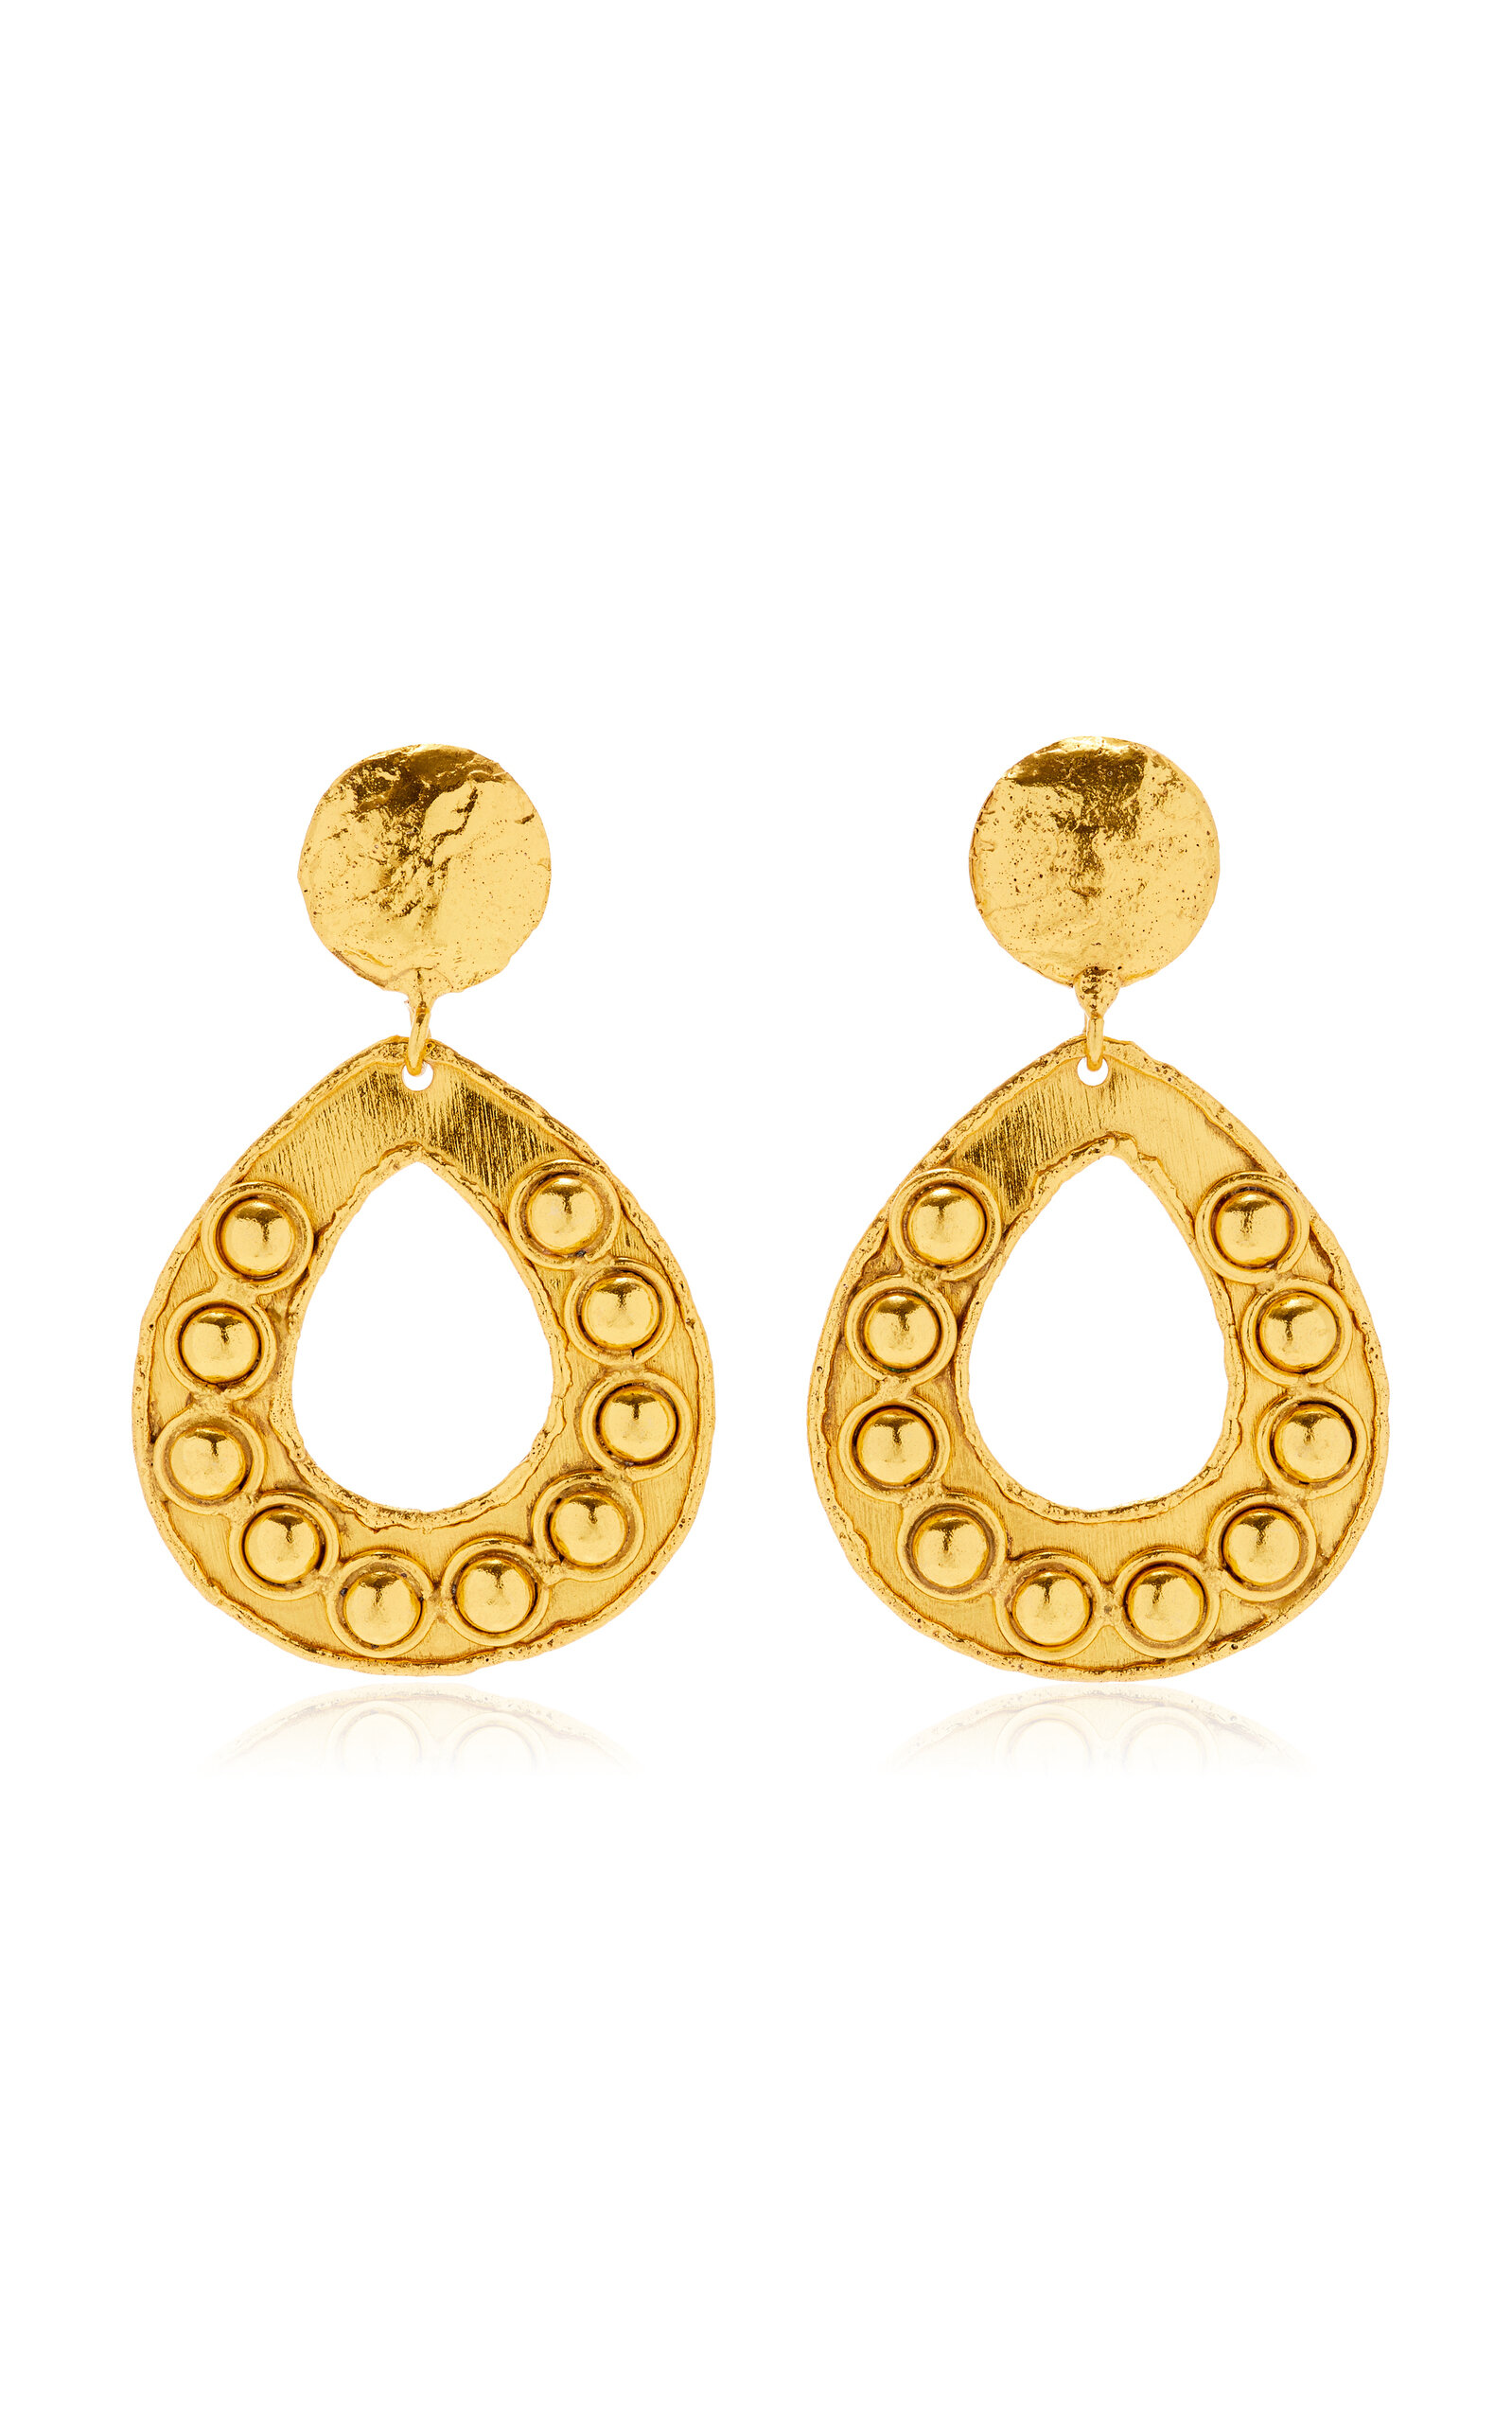 Sylvia Toledano Thalita 22k Gold-plated Earrings